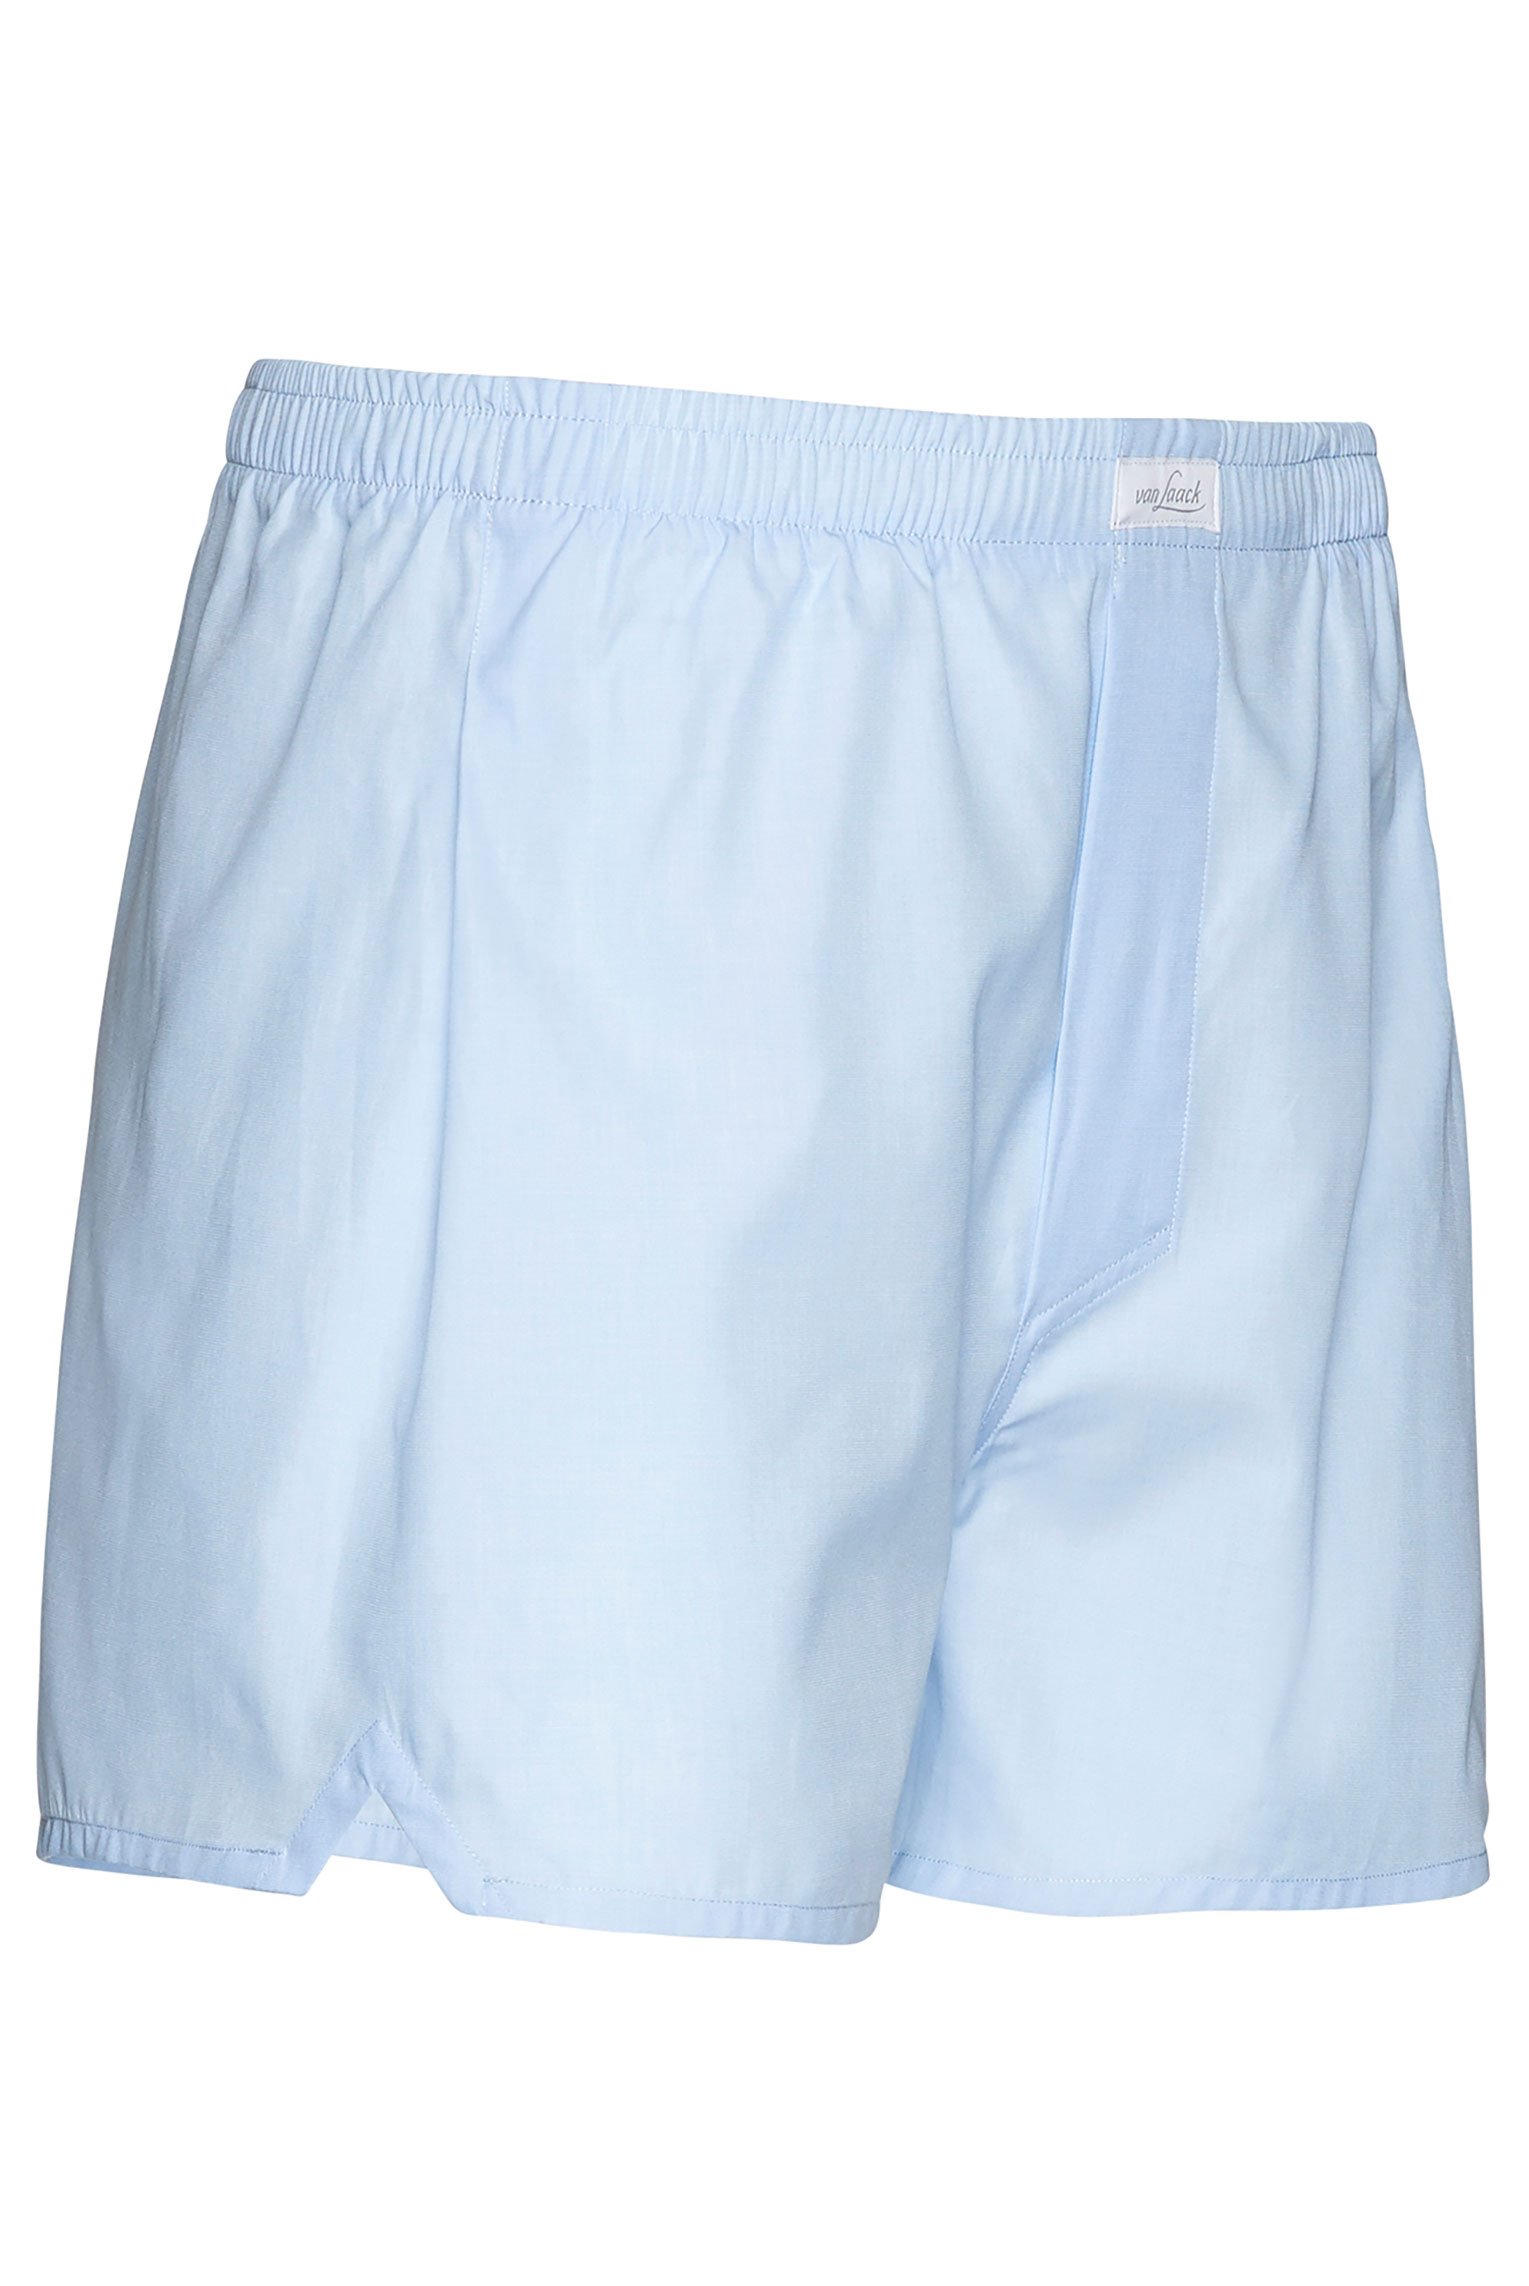 Underwear+Fil-a-Fil Boxer Shorts+91.1100.V4.140766.720.46